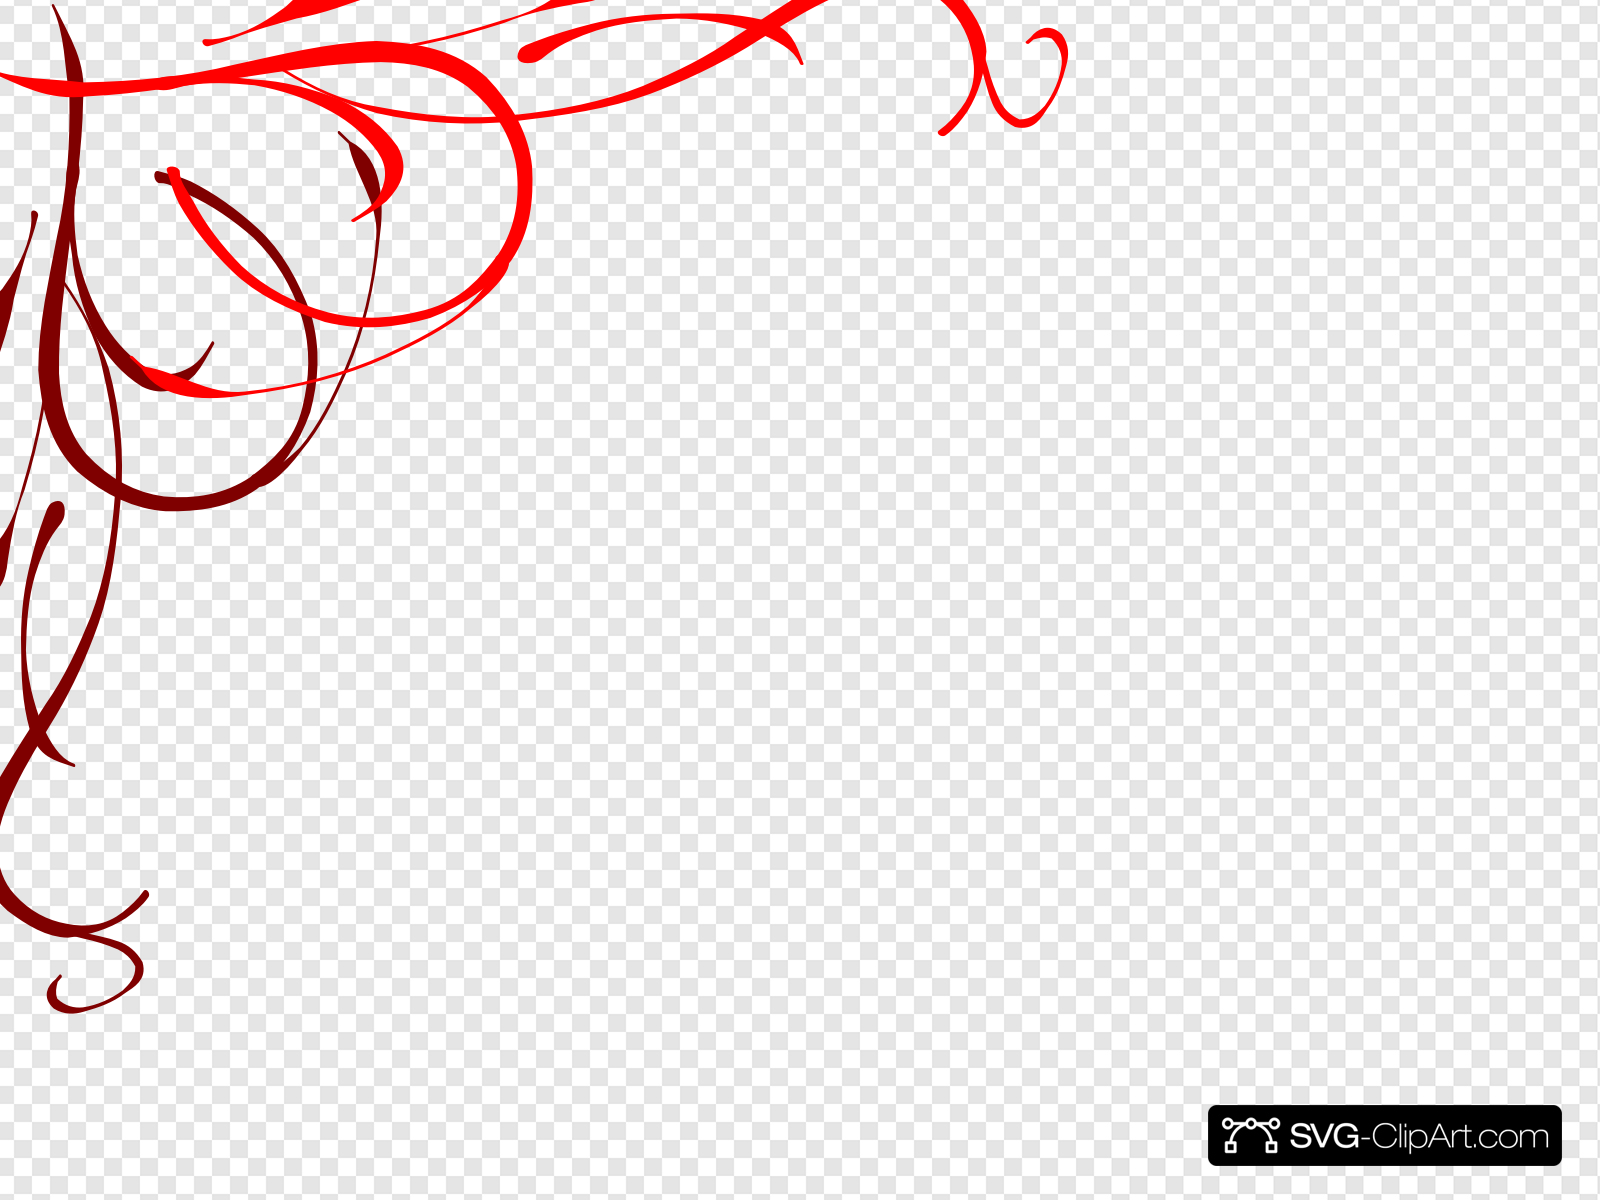 Heart Flourish Red Clip art, Icon and SVG.